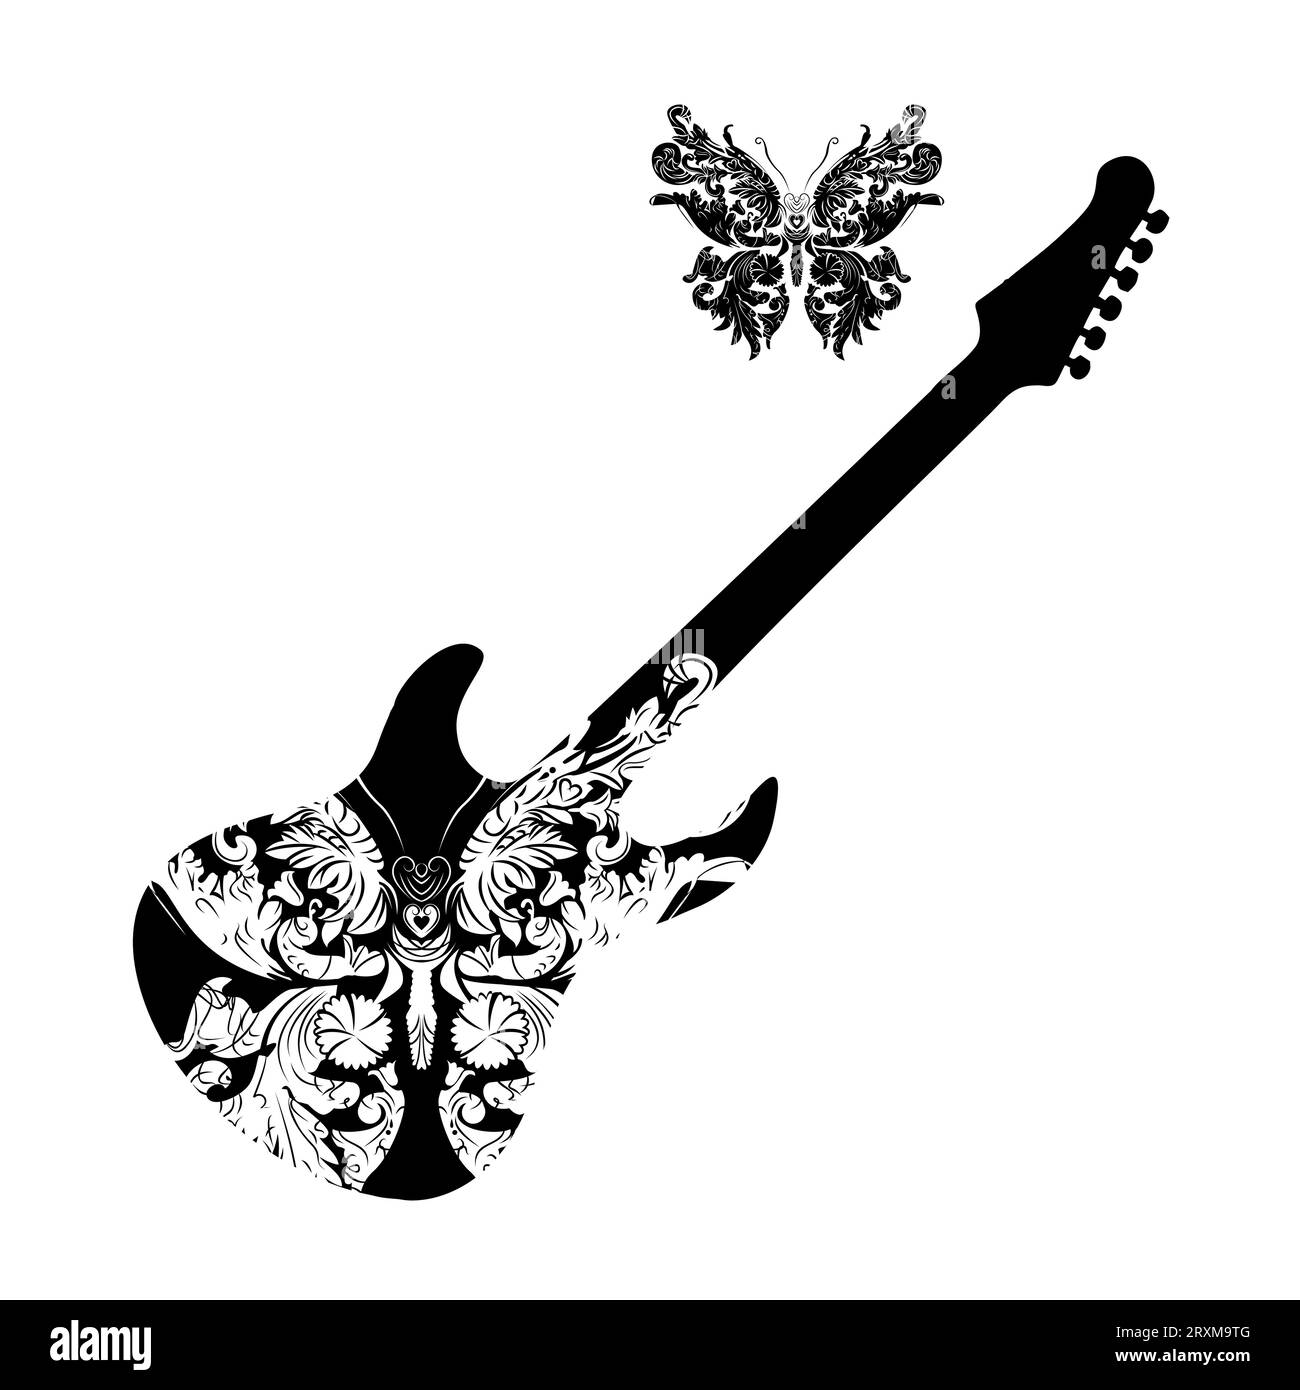 guitar Tattoos - Images, Designs, Inspiration - Inkably.co.uk